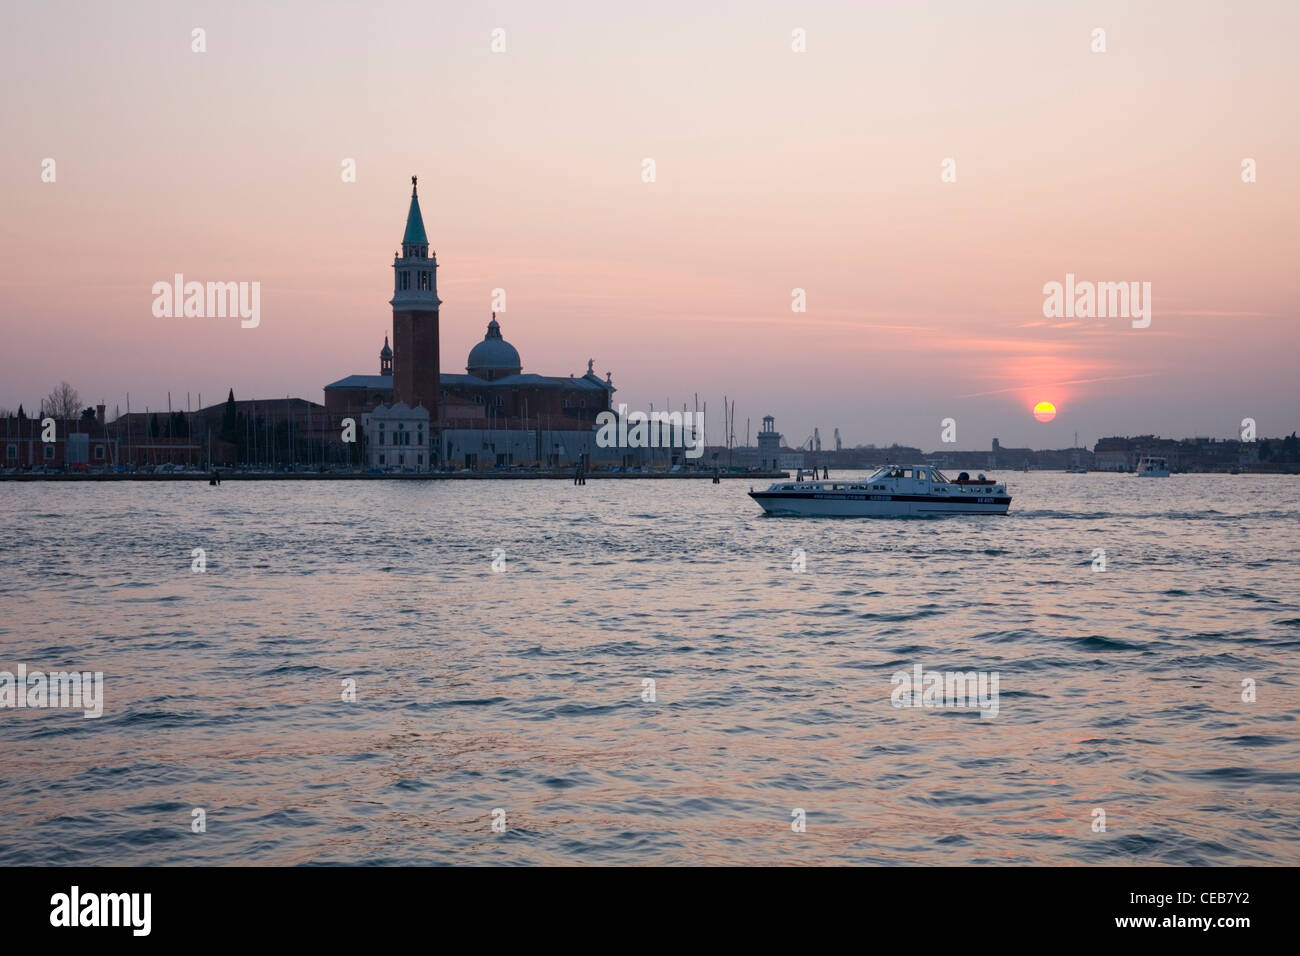 Venecia, Véneto, Italia. Vista del atardecer en laguna de la Chiesa di San Giorgio Maggiore, barco pasando. Foto de stock